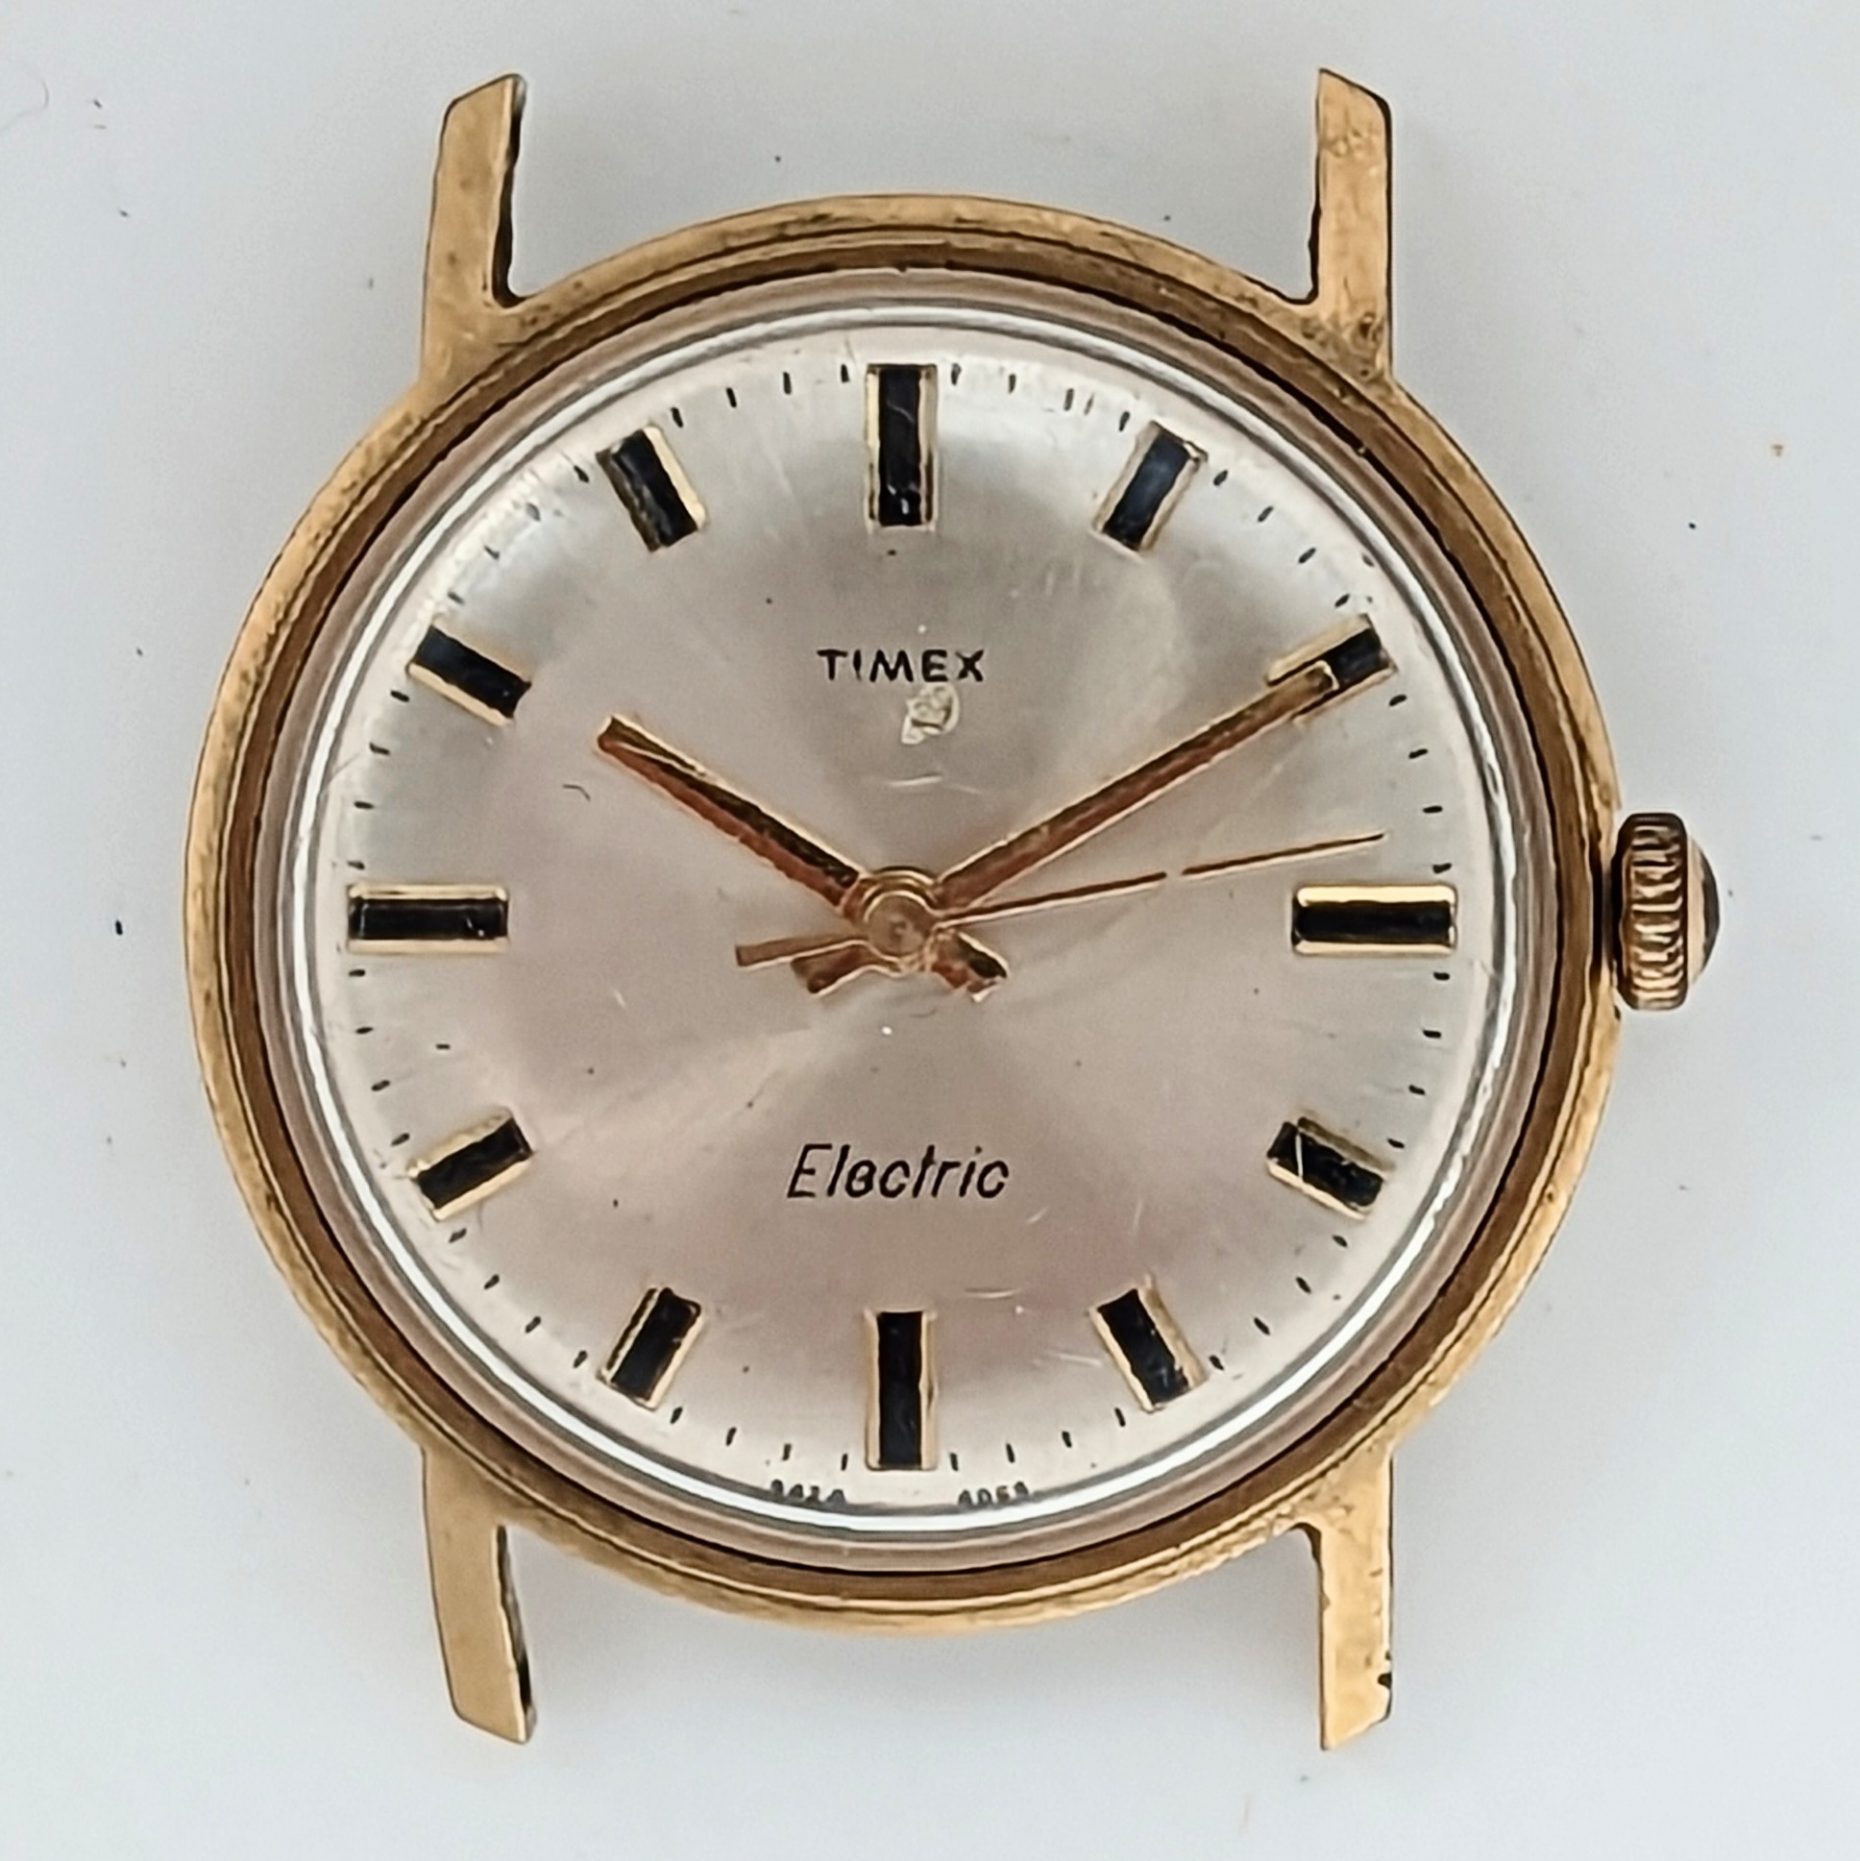 Timex Electric 9424 4069 [1969]